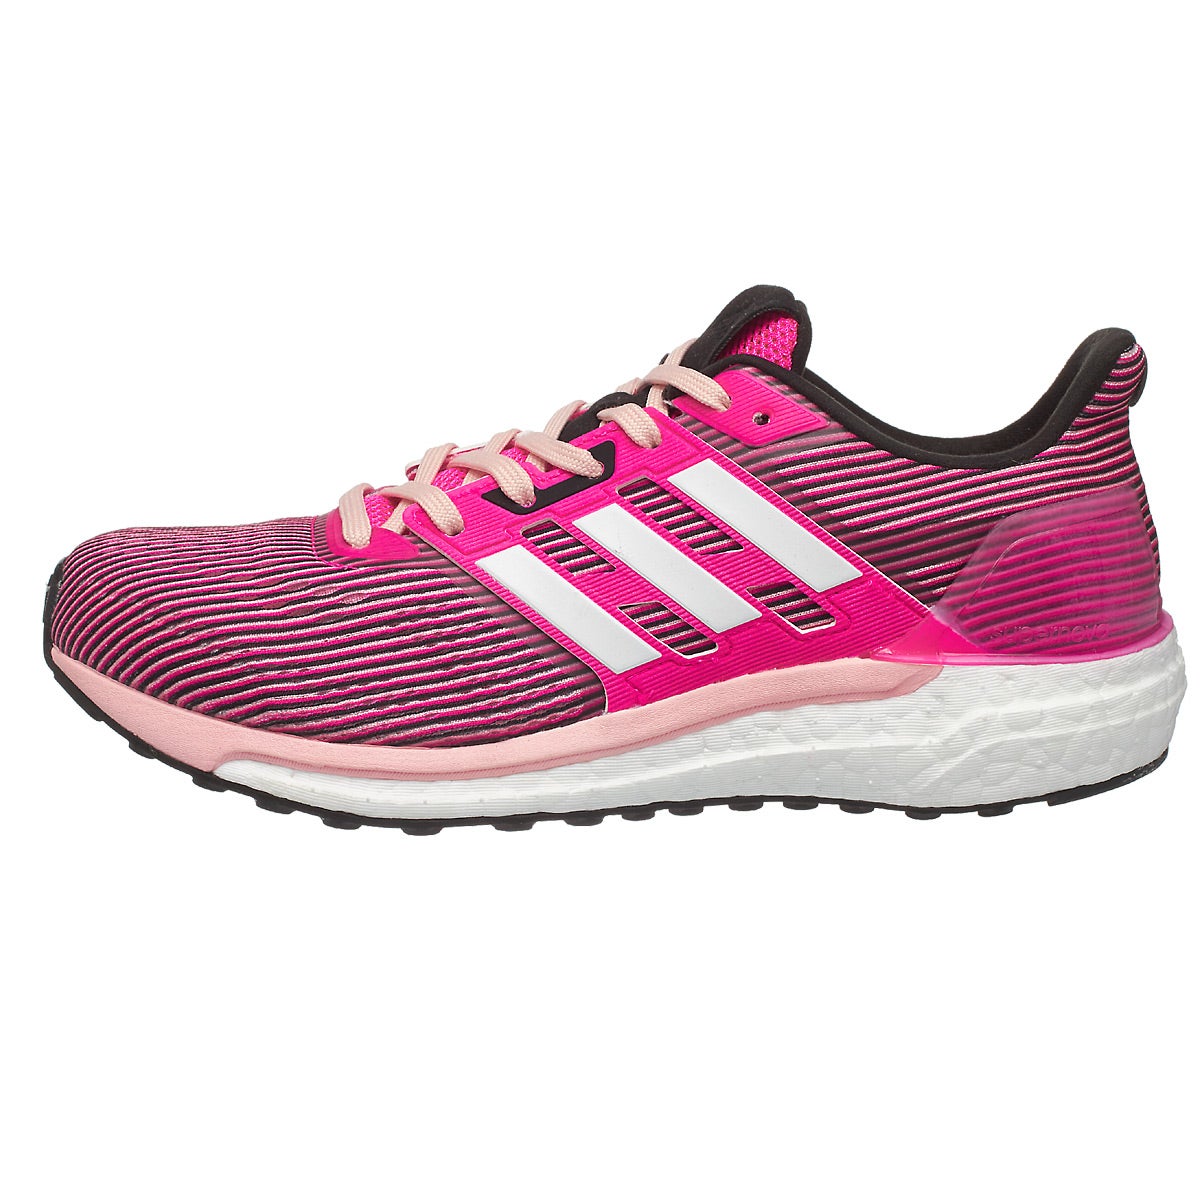 adidas Supernova Women's Shoes Pink/White/Black 360° View | Running ...